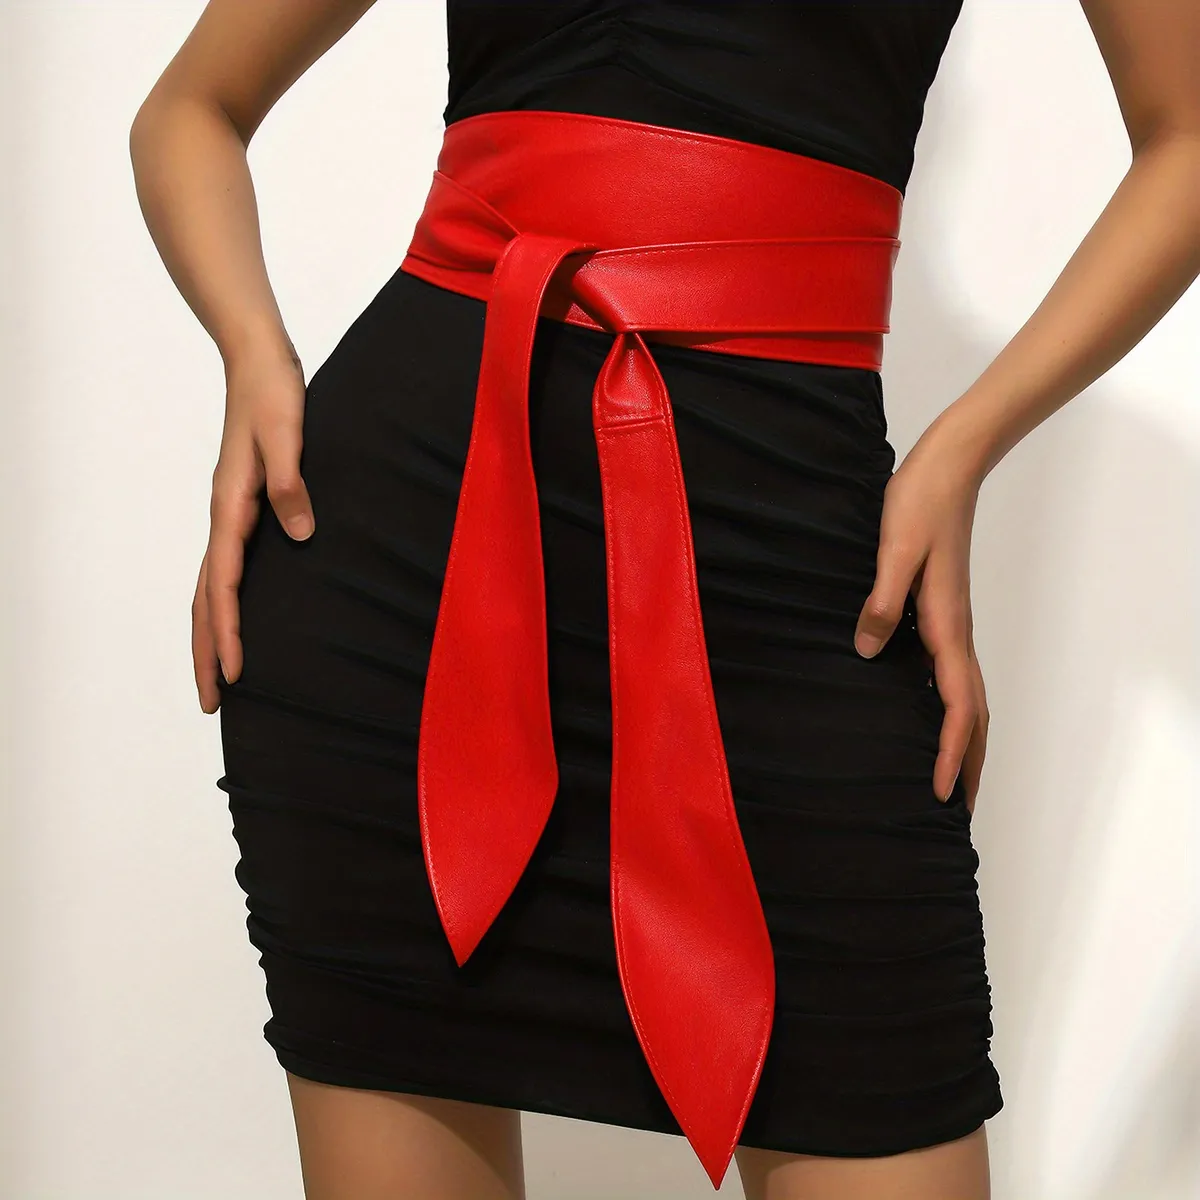 stylish waist belt for dresses